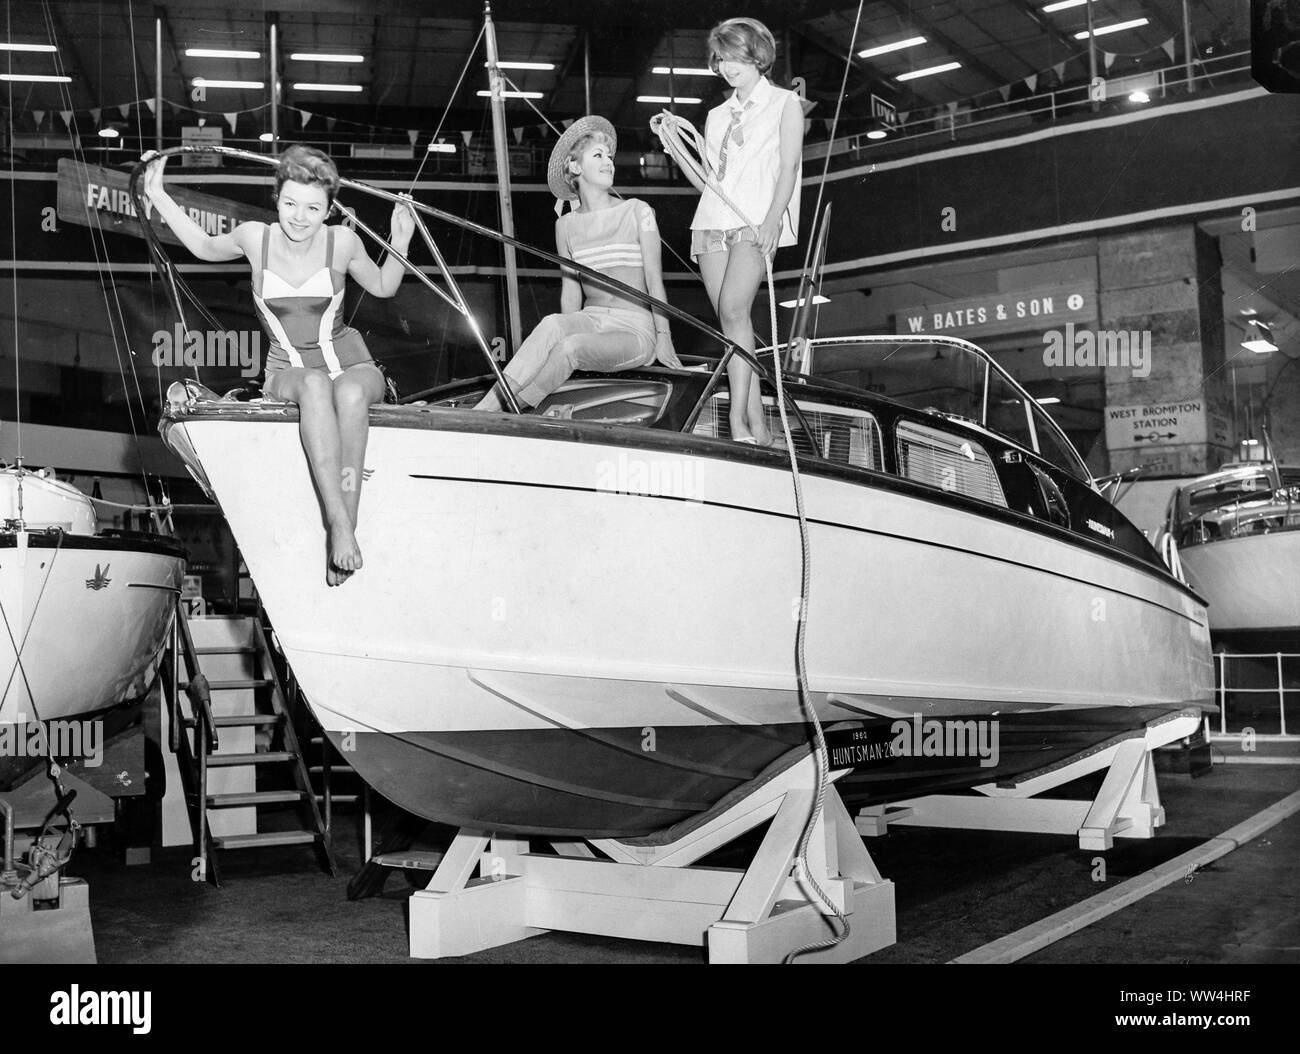 International Boat Show, Earls Court, London, 1962 Banque D'Images